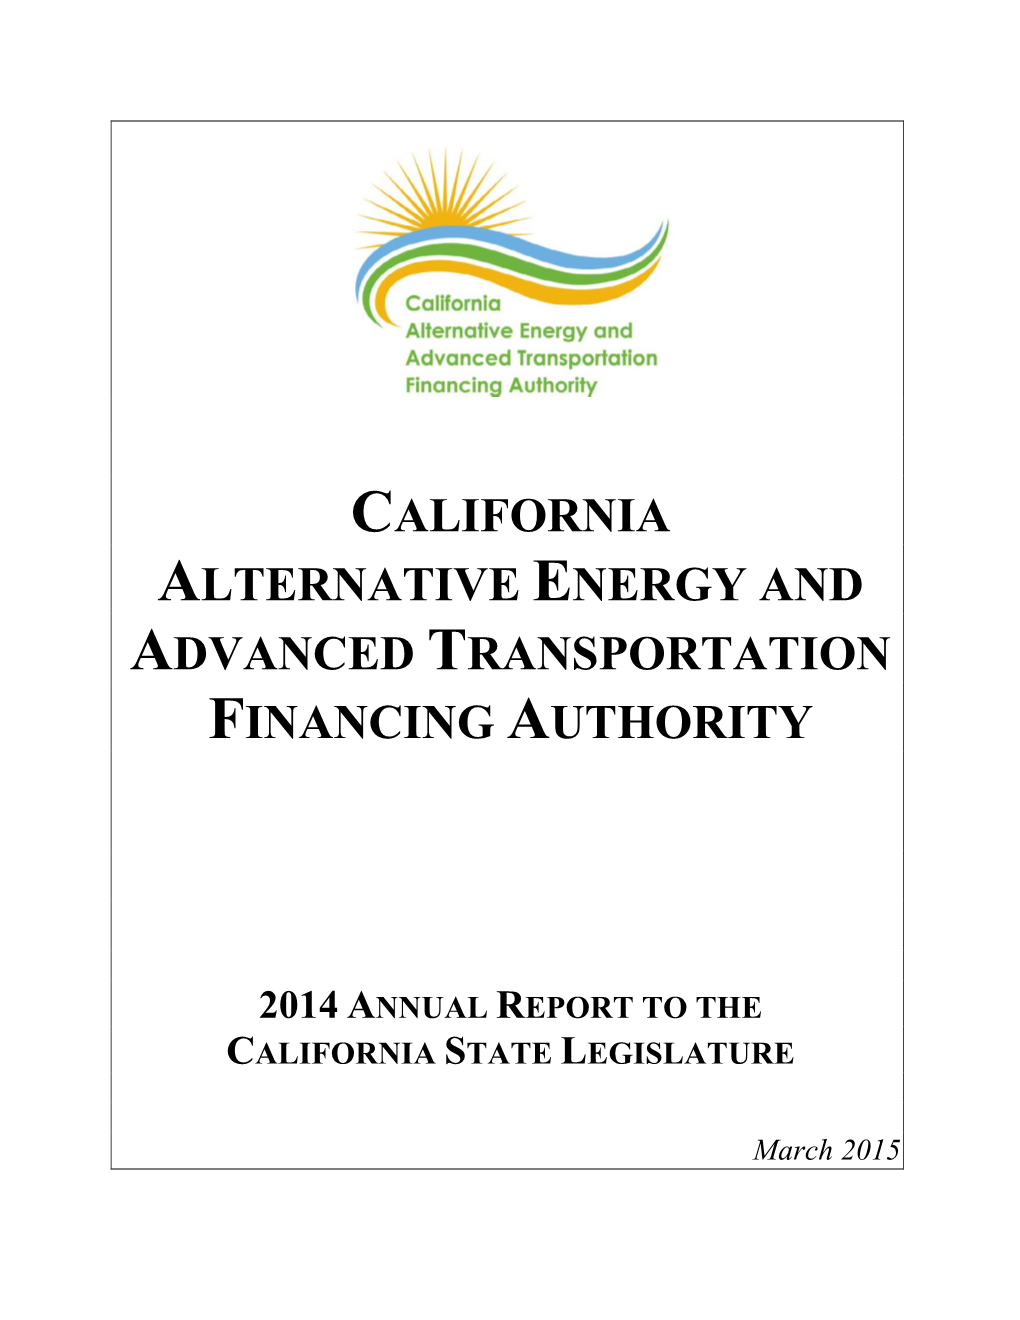 California Alternative Energy and Advanced Transportation Financing Authority